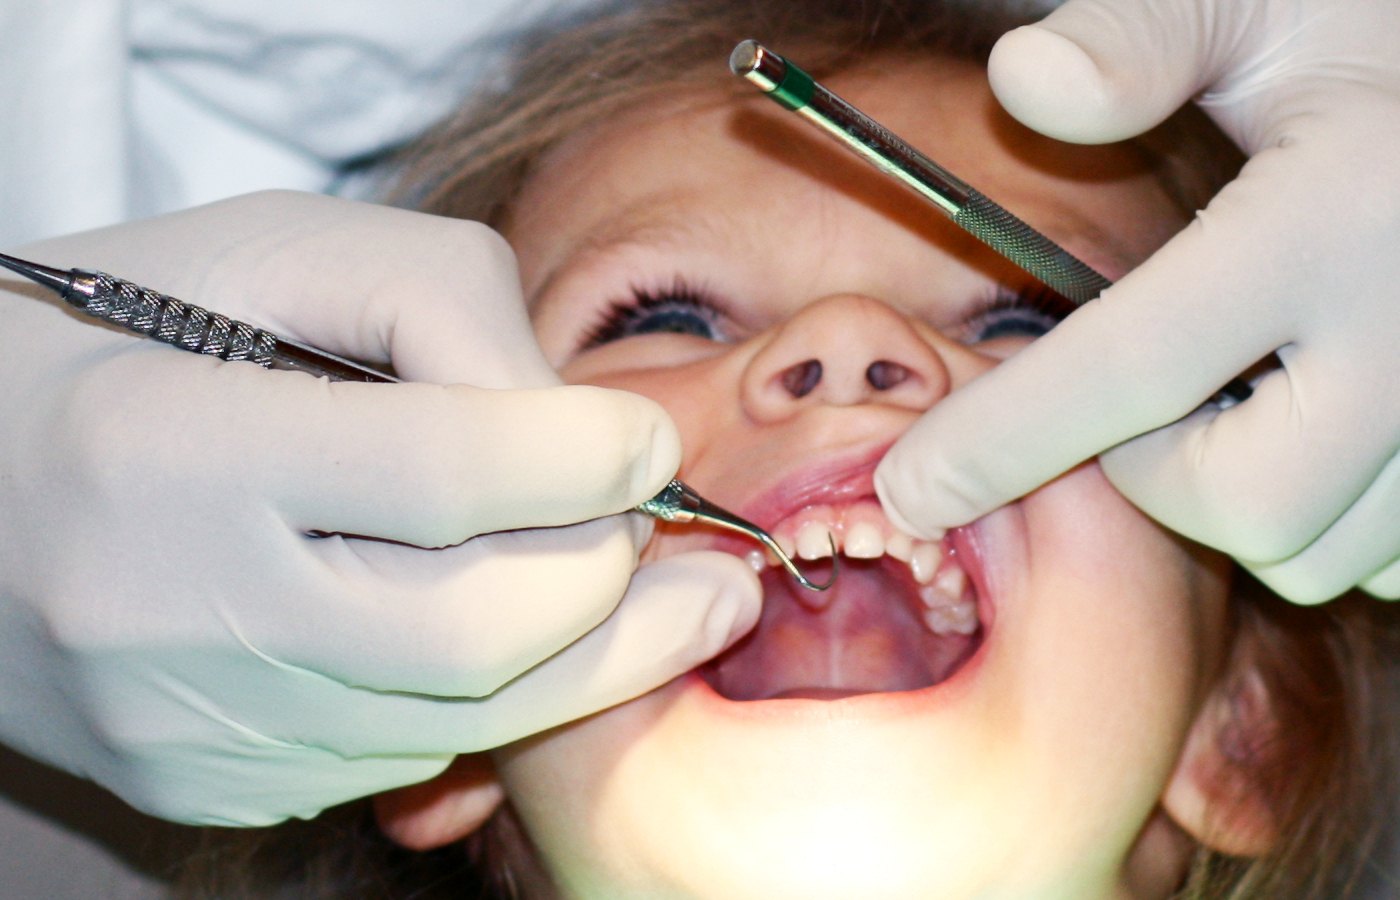 British Dental Association warns of widening oral health gap between wealthy and poor children in Scotland